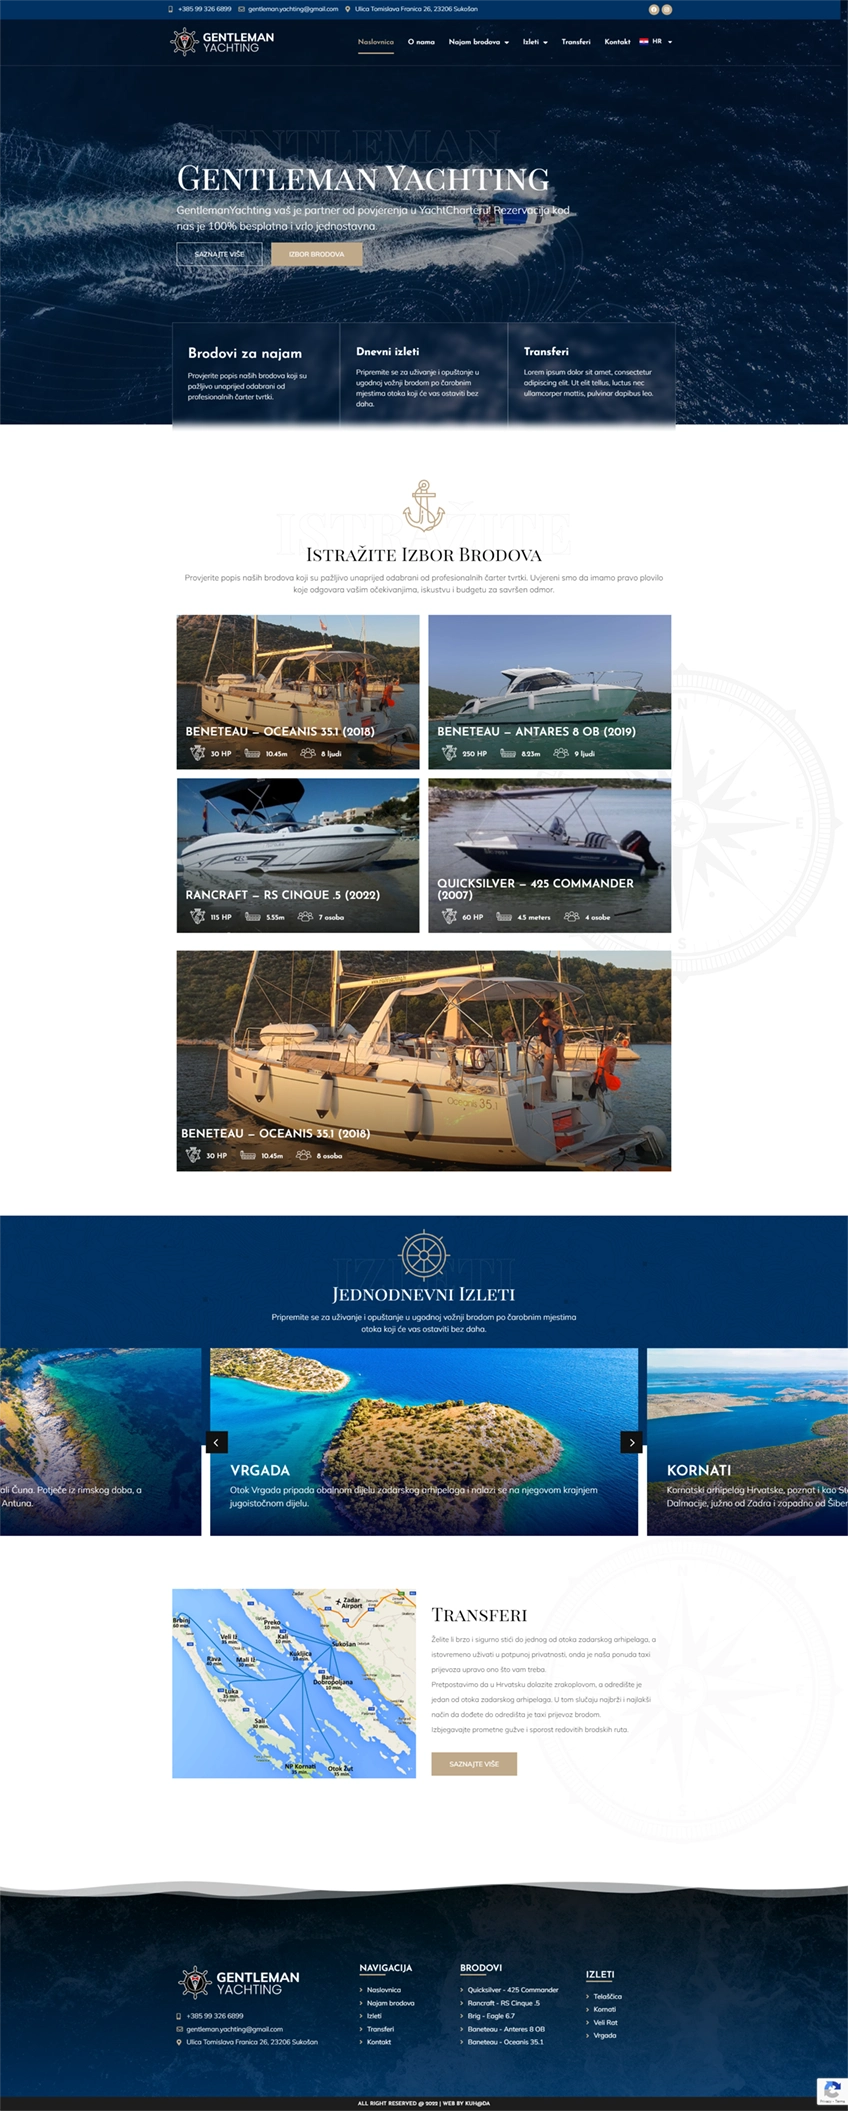 kuhada webdesign gentleman yachting hr homepage 2022 08 22 13 37 21 copy